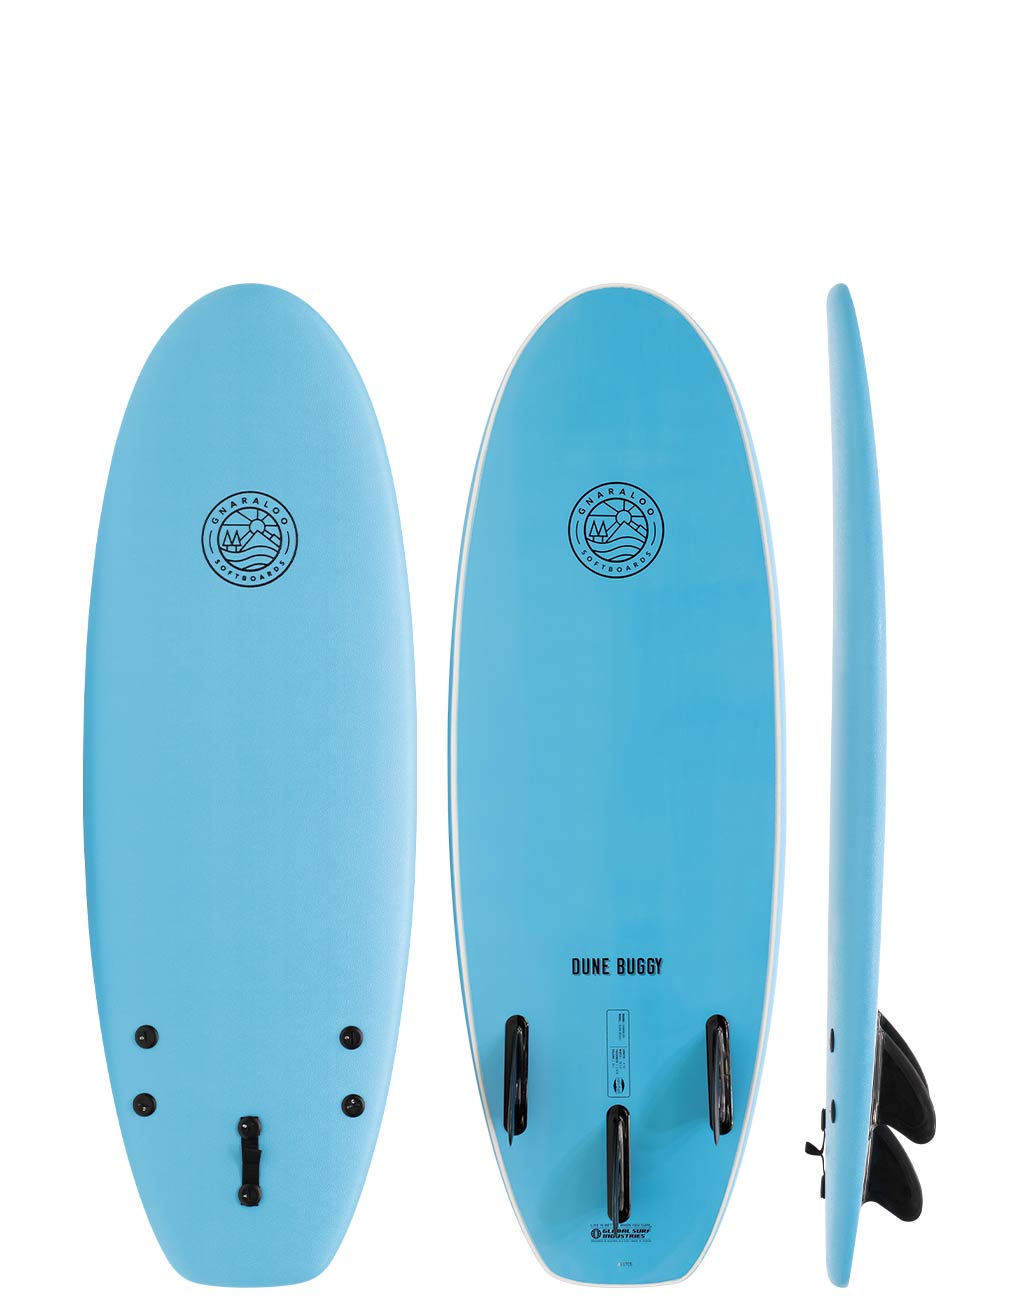 Gnaraloo soft surfboards - Dune Buggy blue surfboard